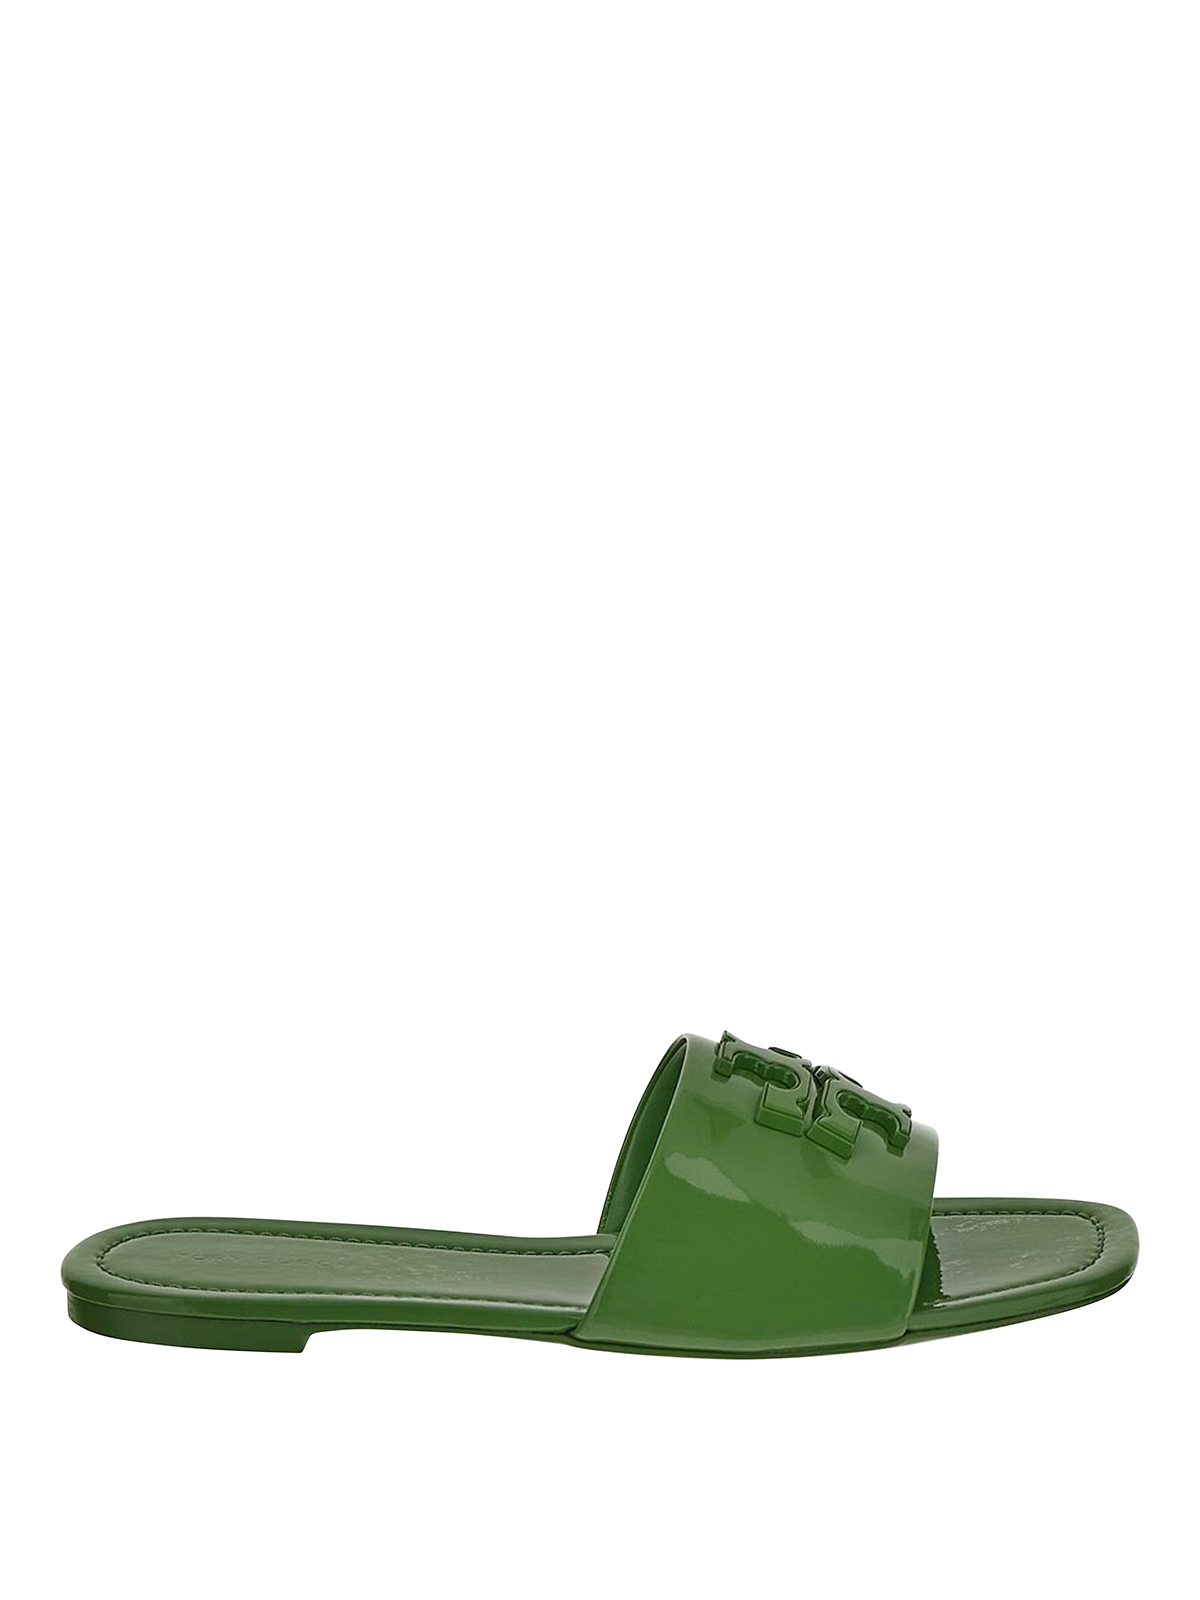 Tory Burch Sandals In Green